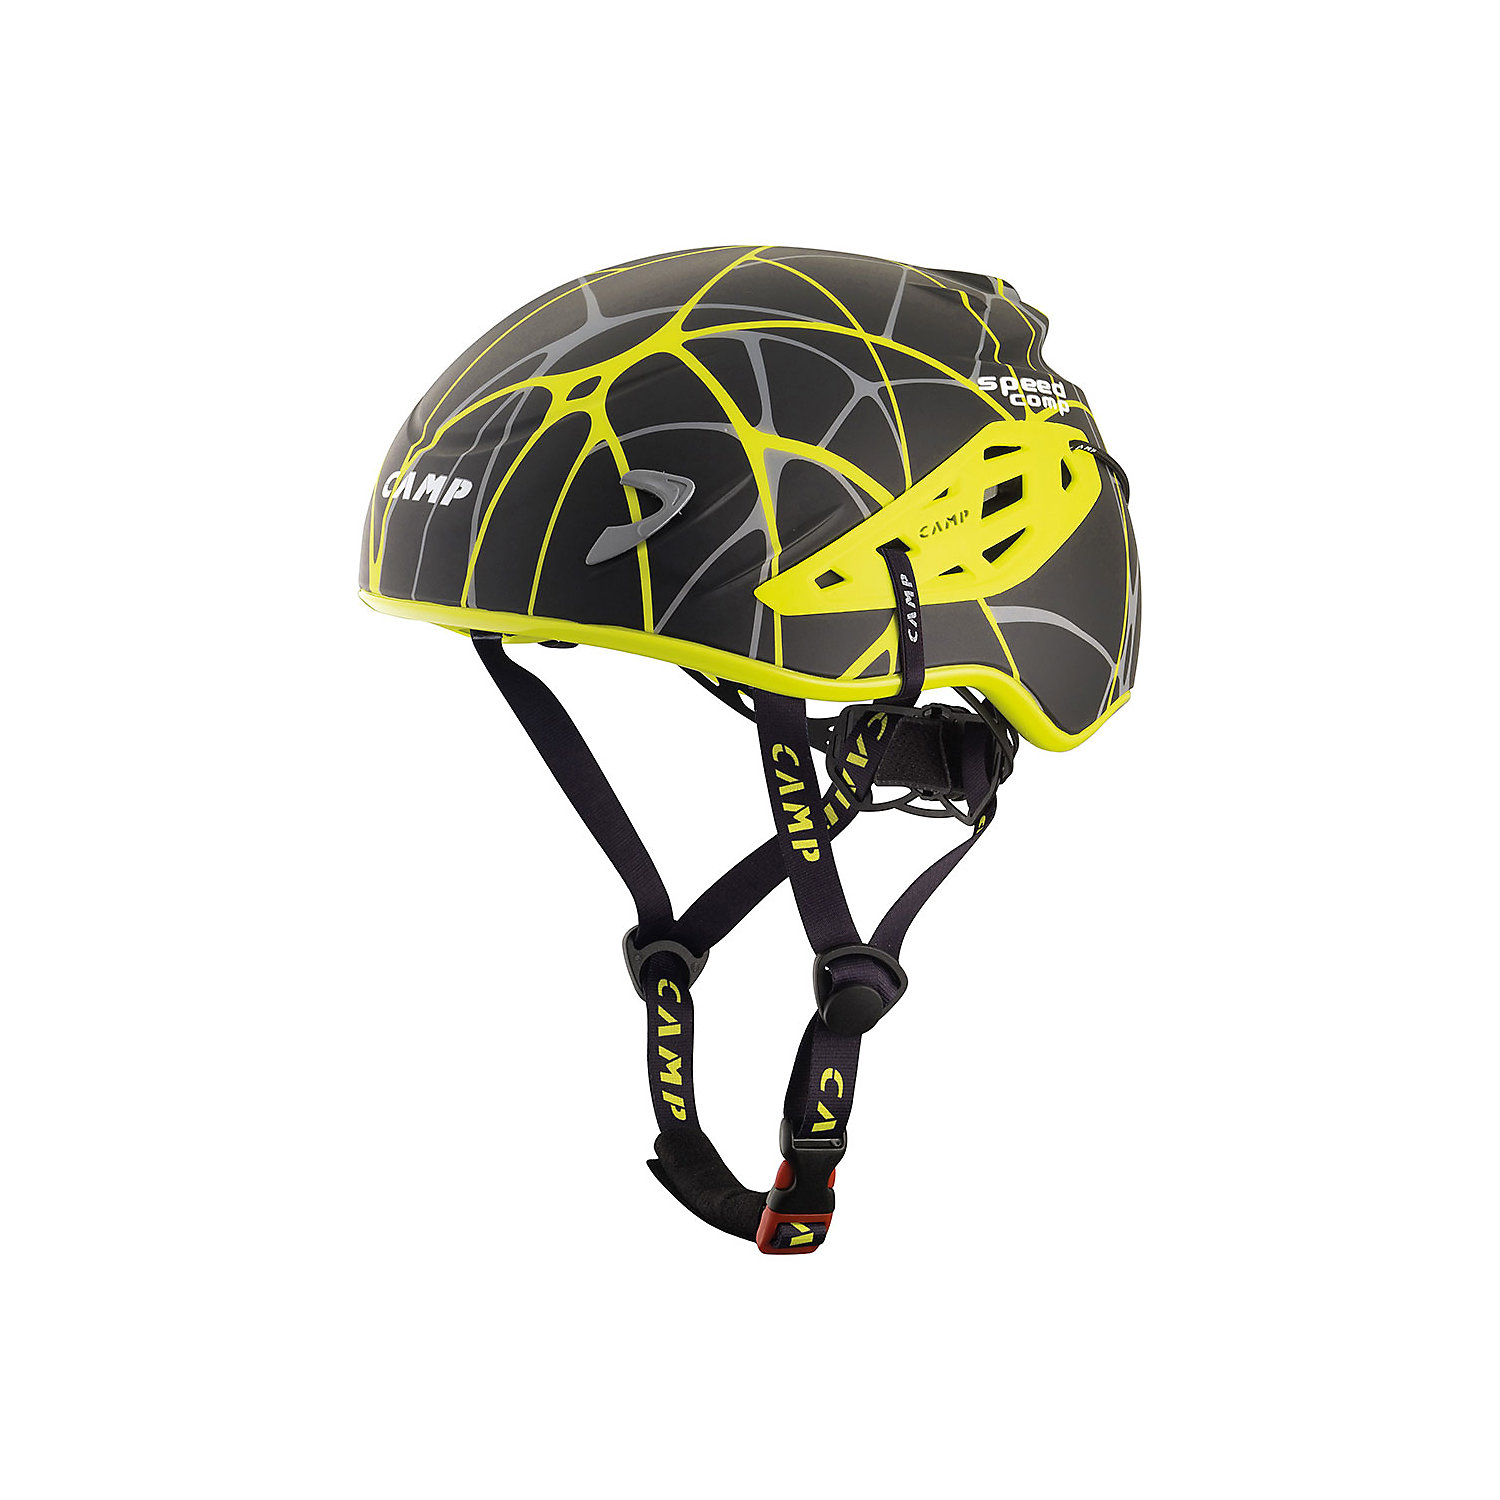 Camp USA Speed Comp Helmet